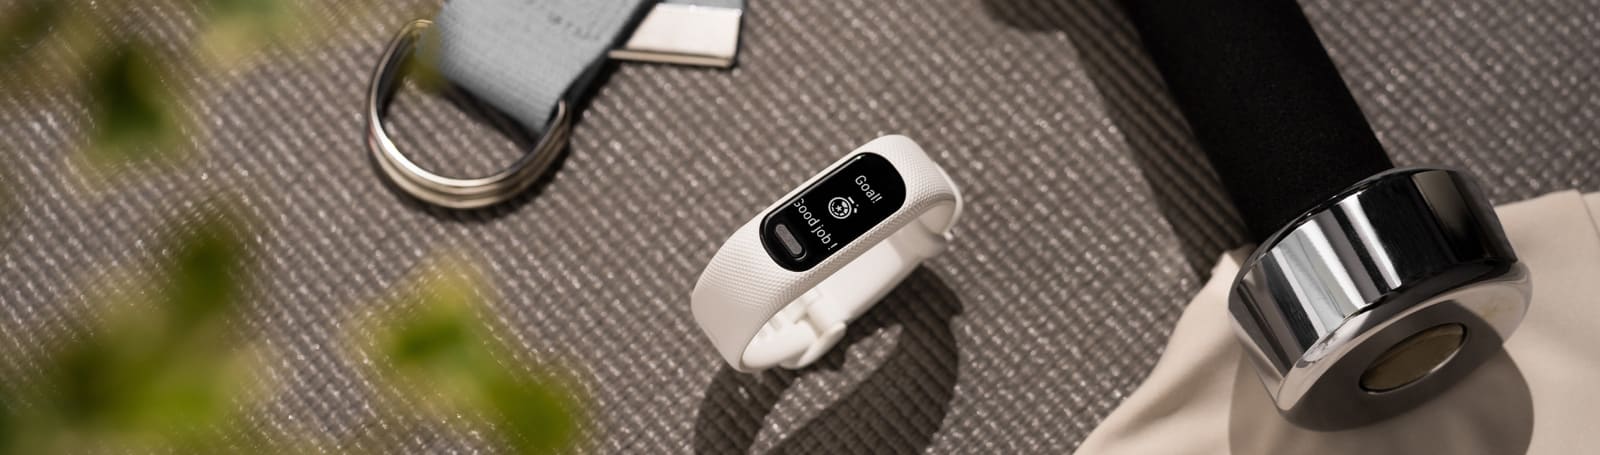 Garmin-Smart-Watch-Vivosmart-5-Fitness-Tracker-Tech-3